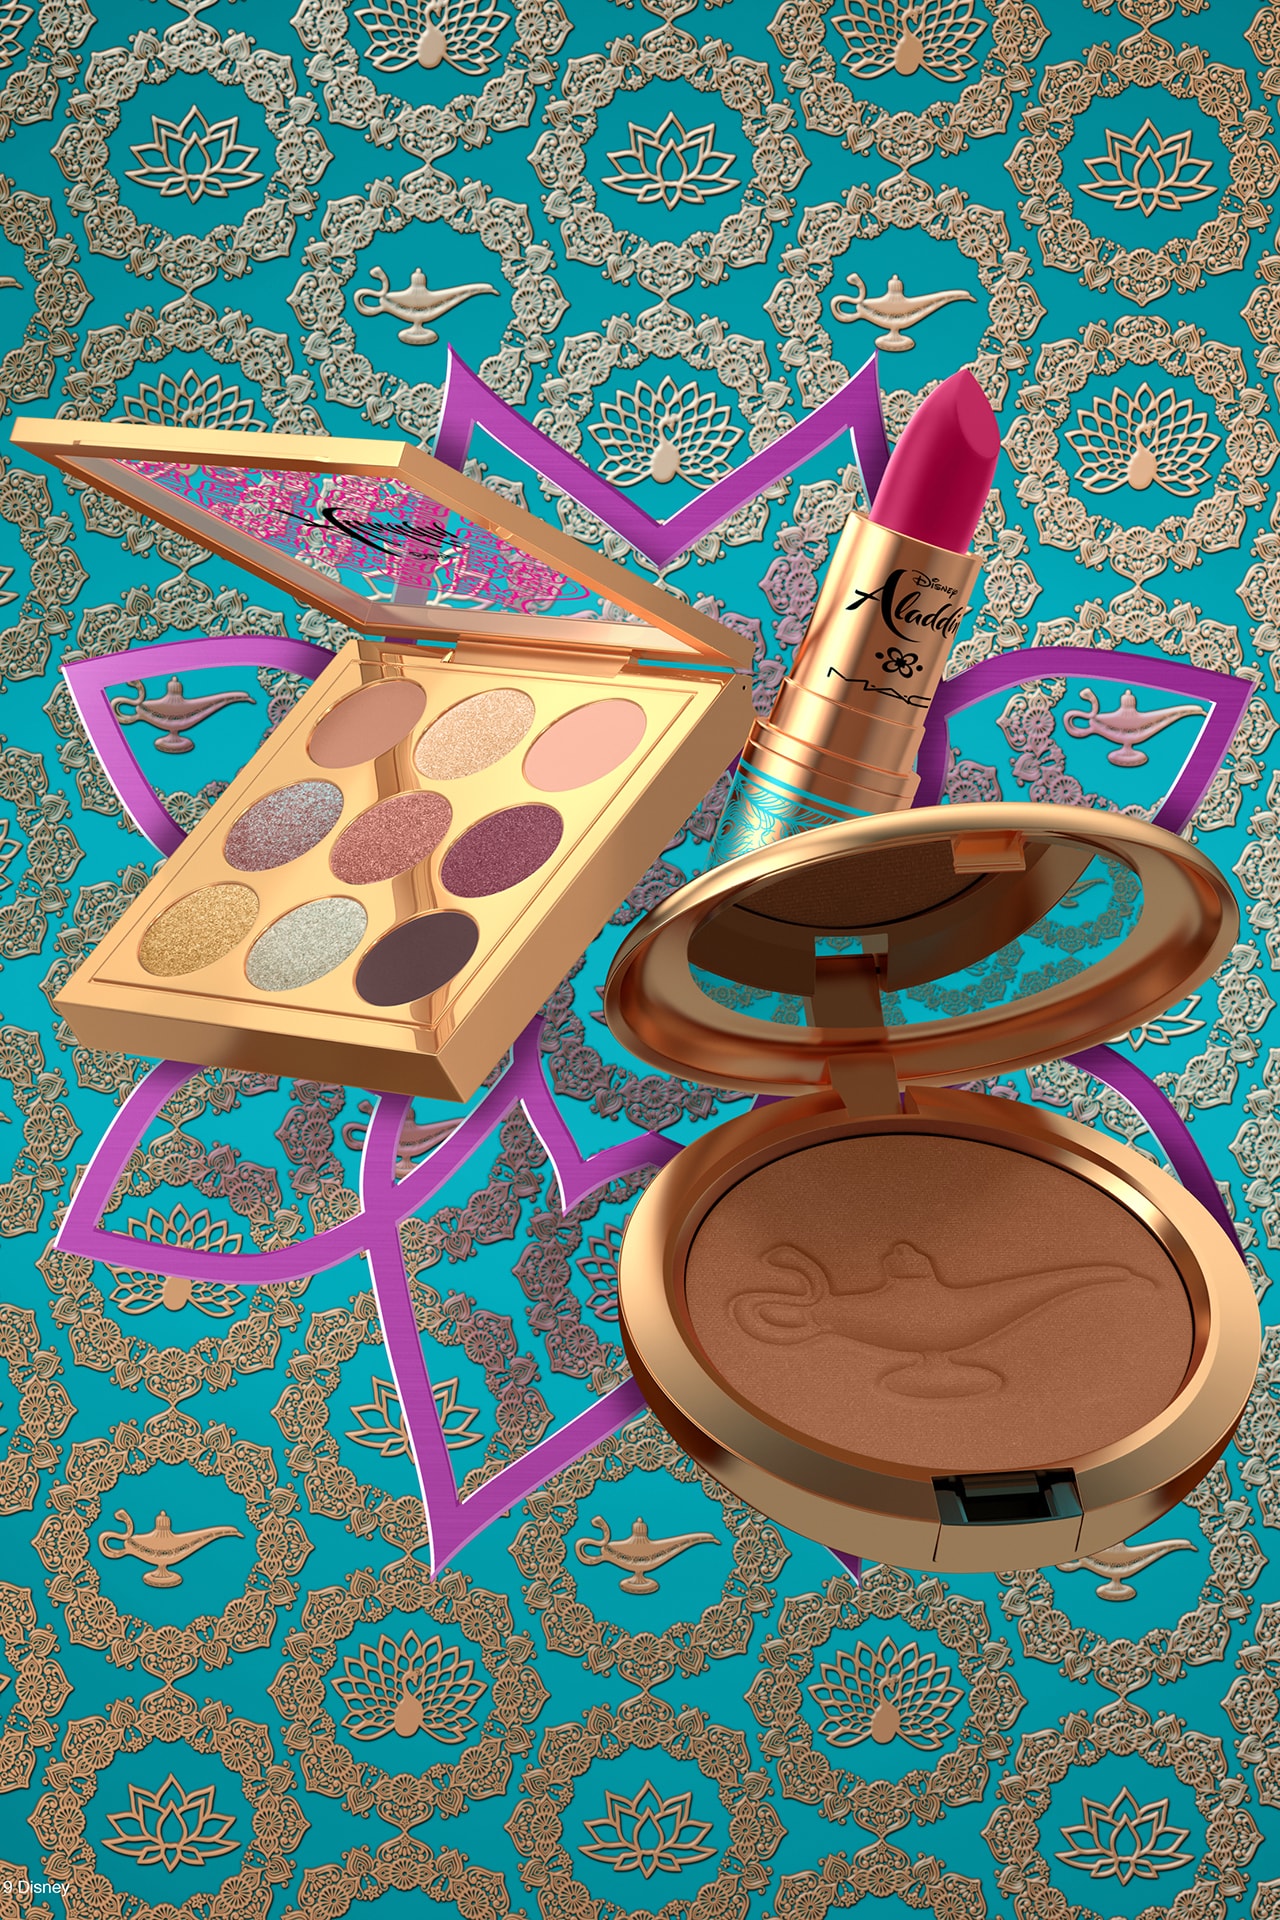 Disney x MAC Cosmetics Aladdin Makeup Collaboration bronzer lamp eyeshadow palette lipstick packaging Jasmine Princess 2019 Beauty